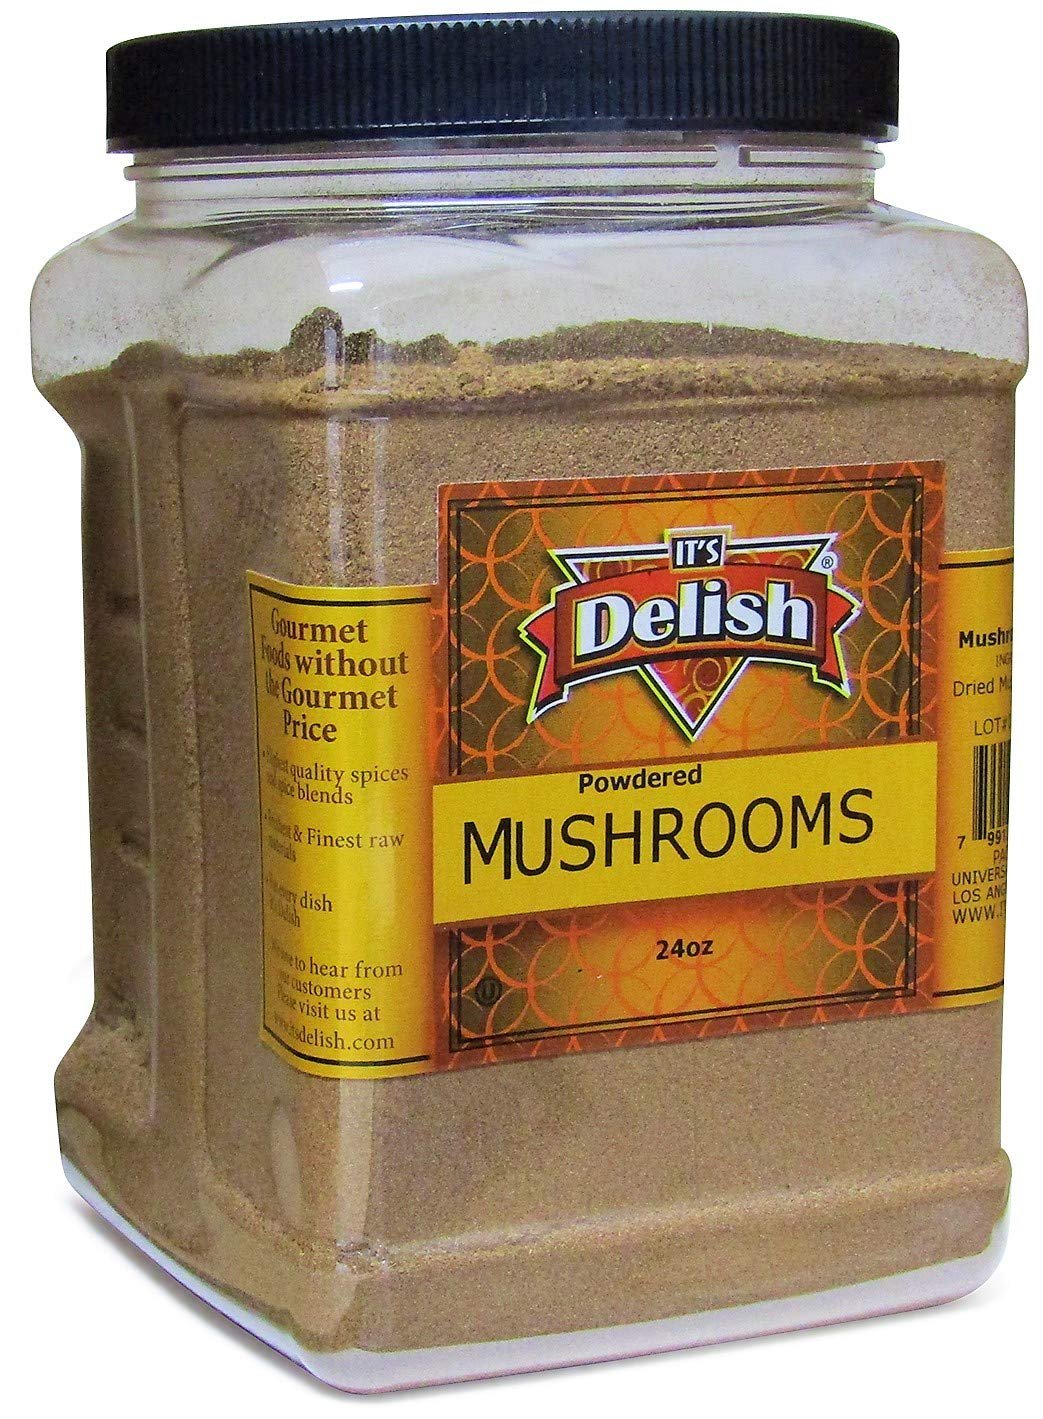 Ground Dried Mushroom Powder, 24 Oz| Jumbo Reusable Container